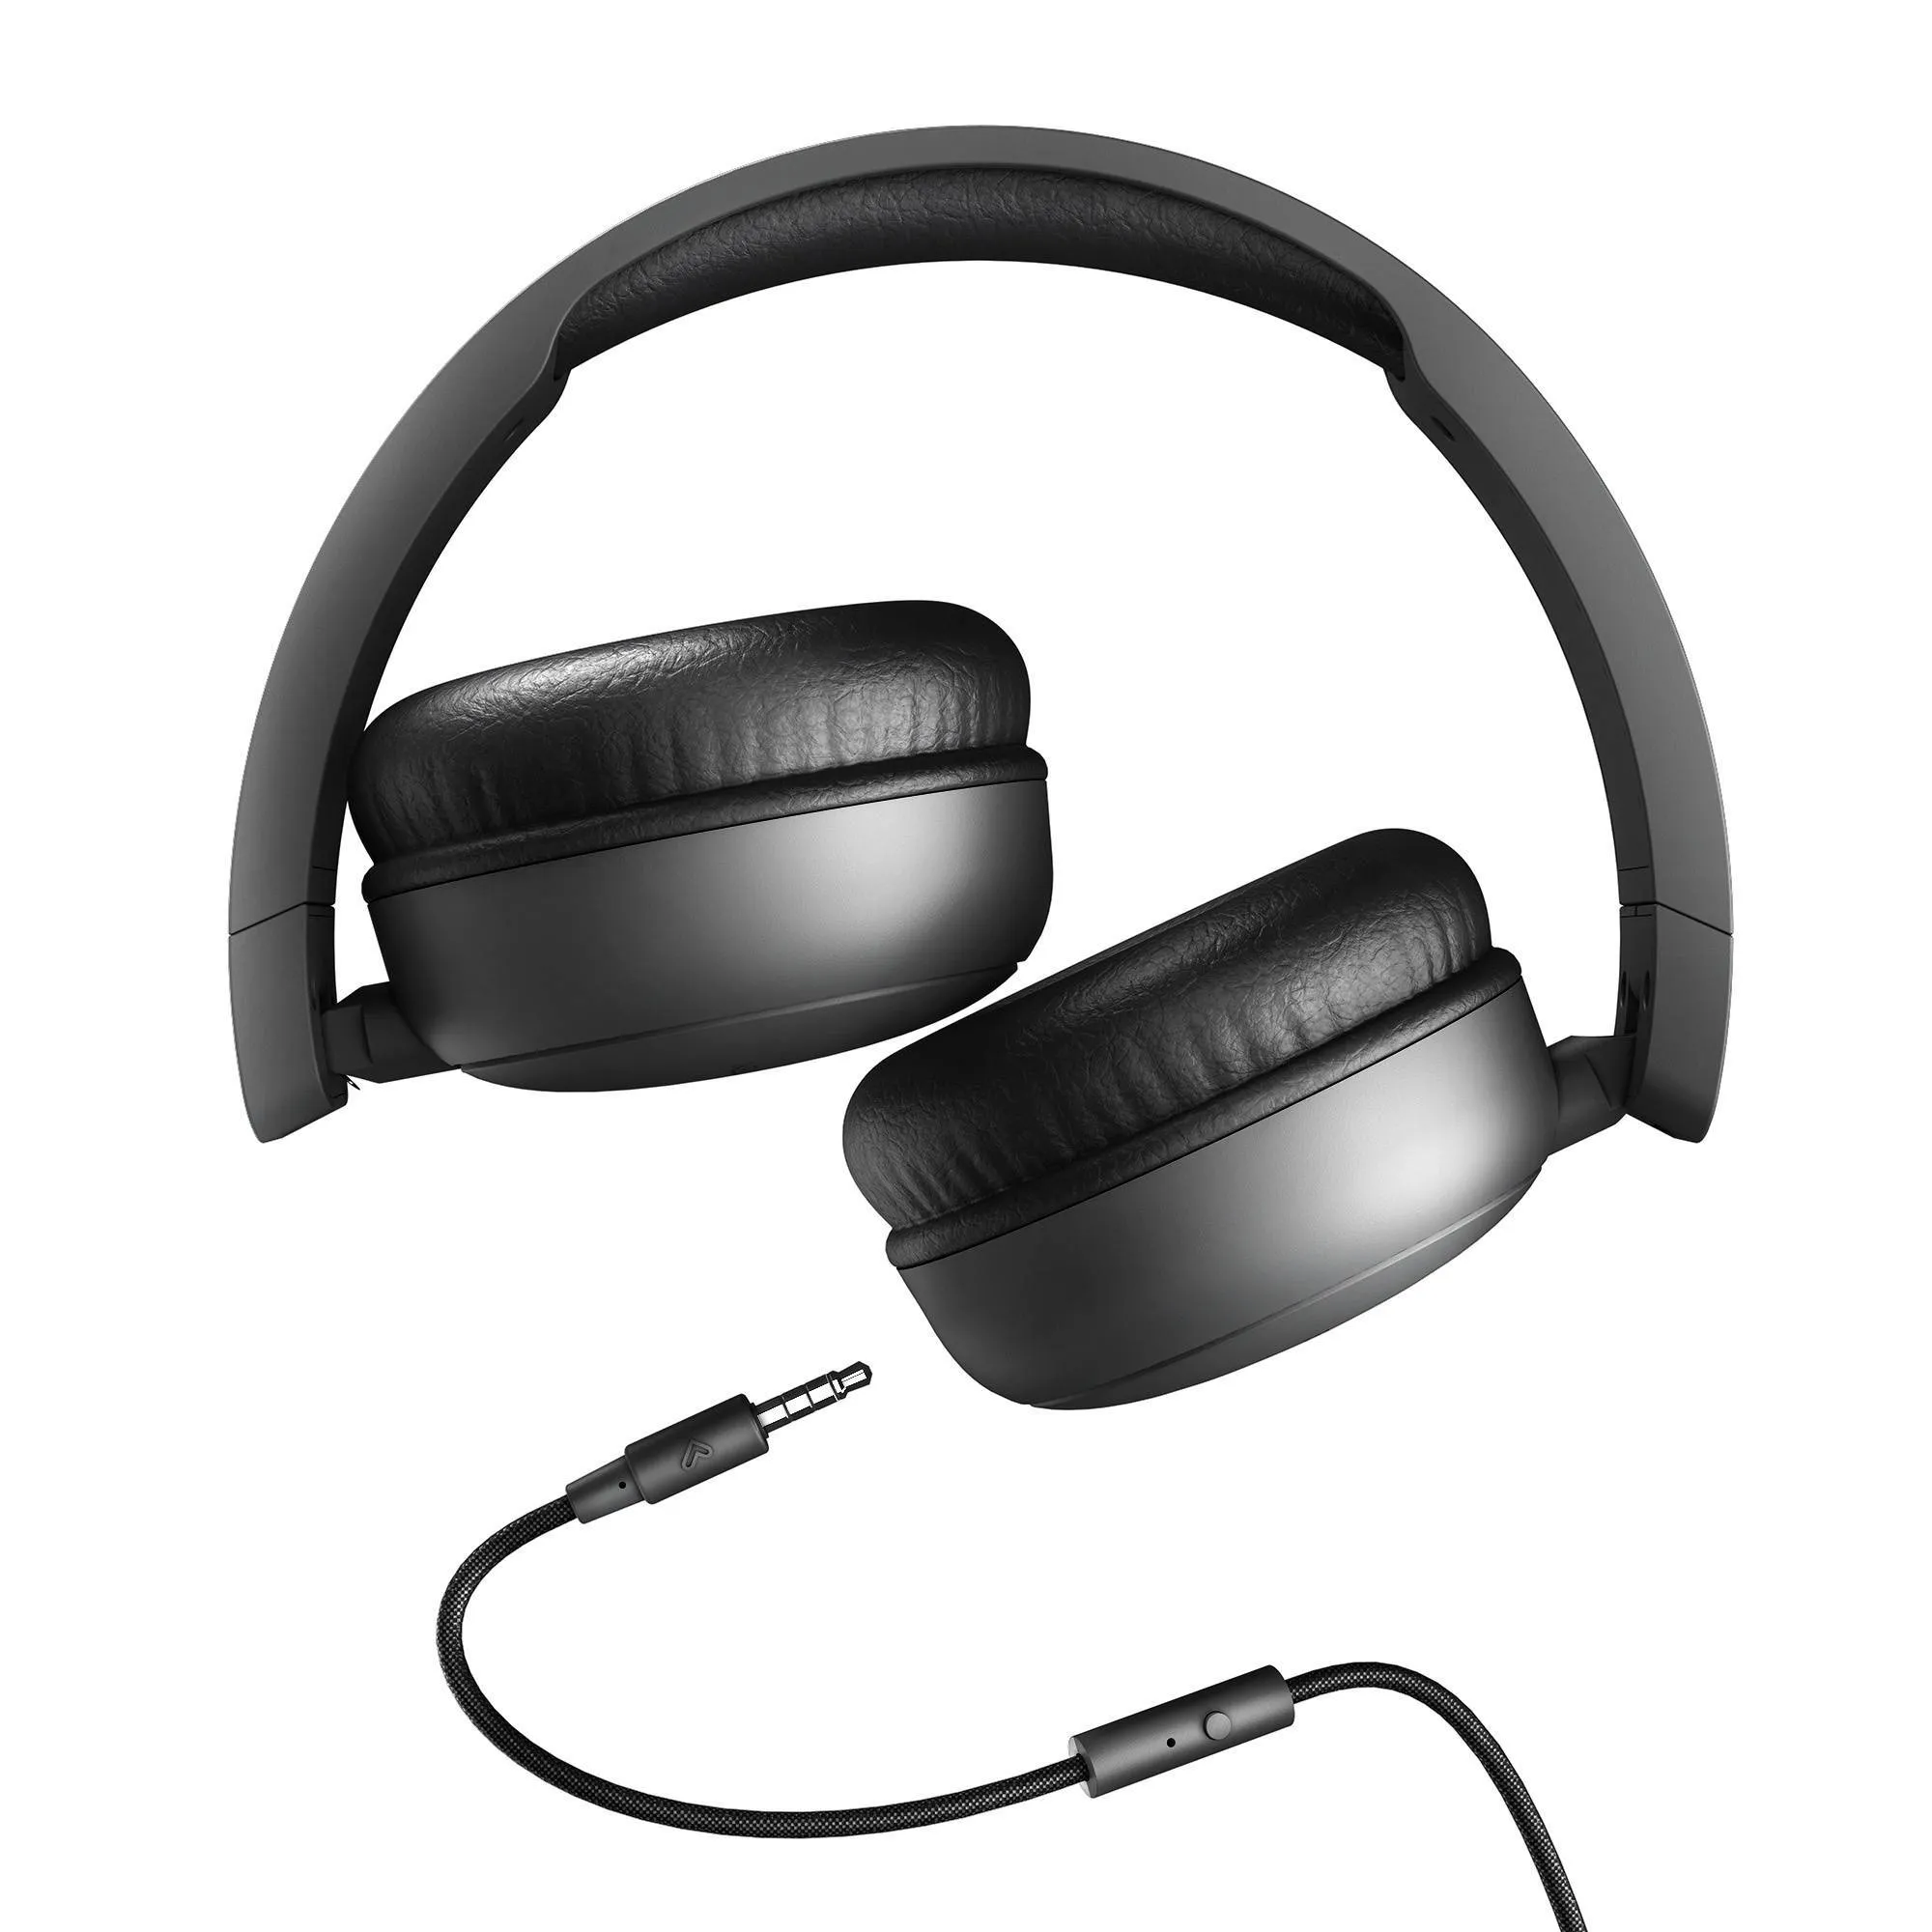 Soundspire foldable headphones with padded, adjustable, ergonomic headband.